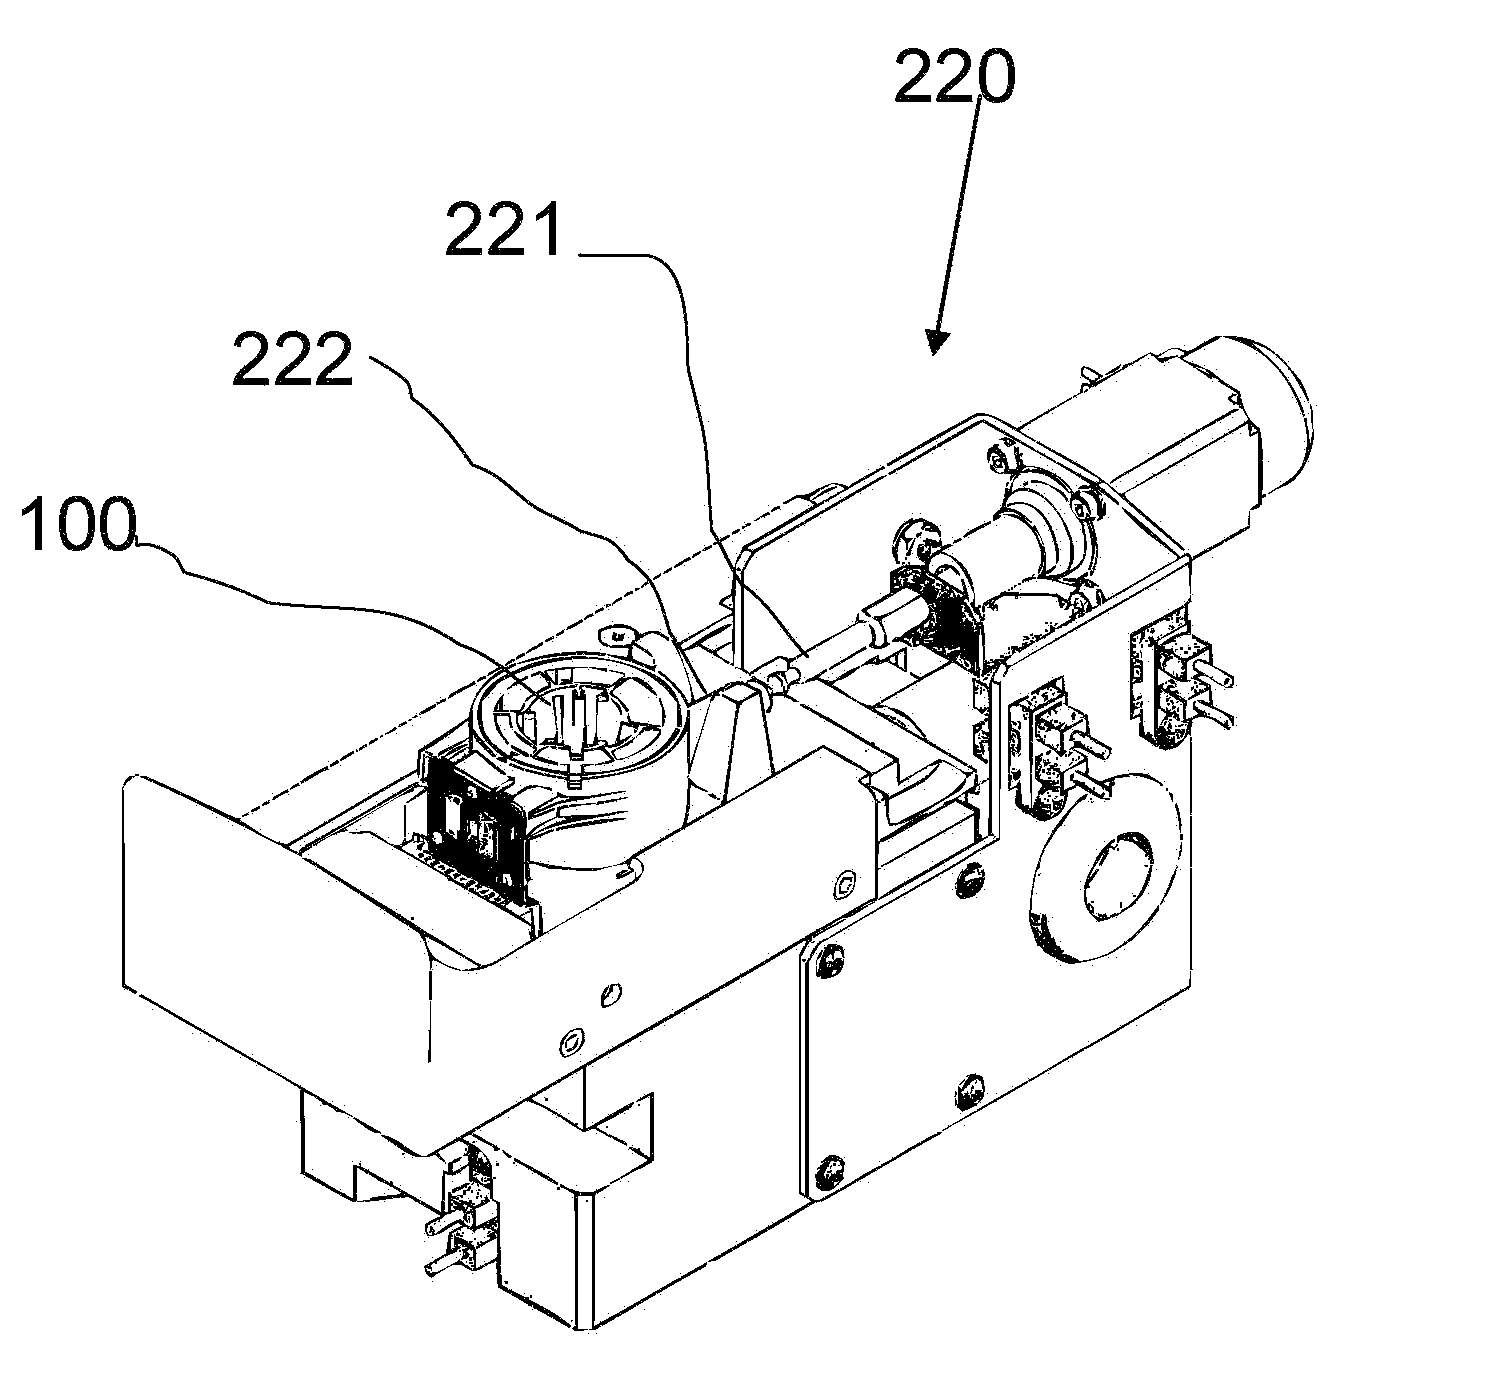 Multi-chamber rotating valve